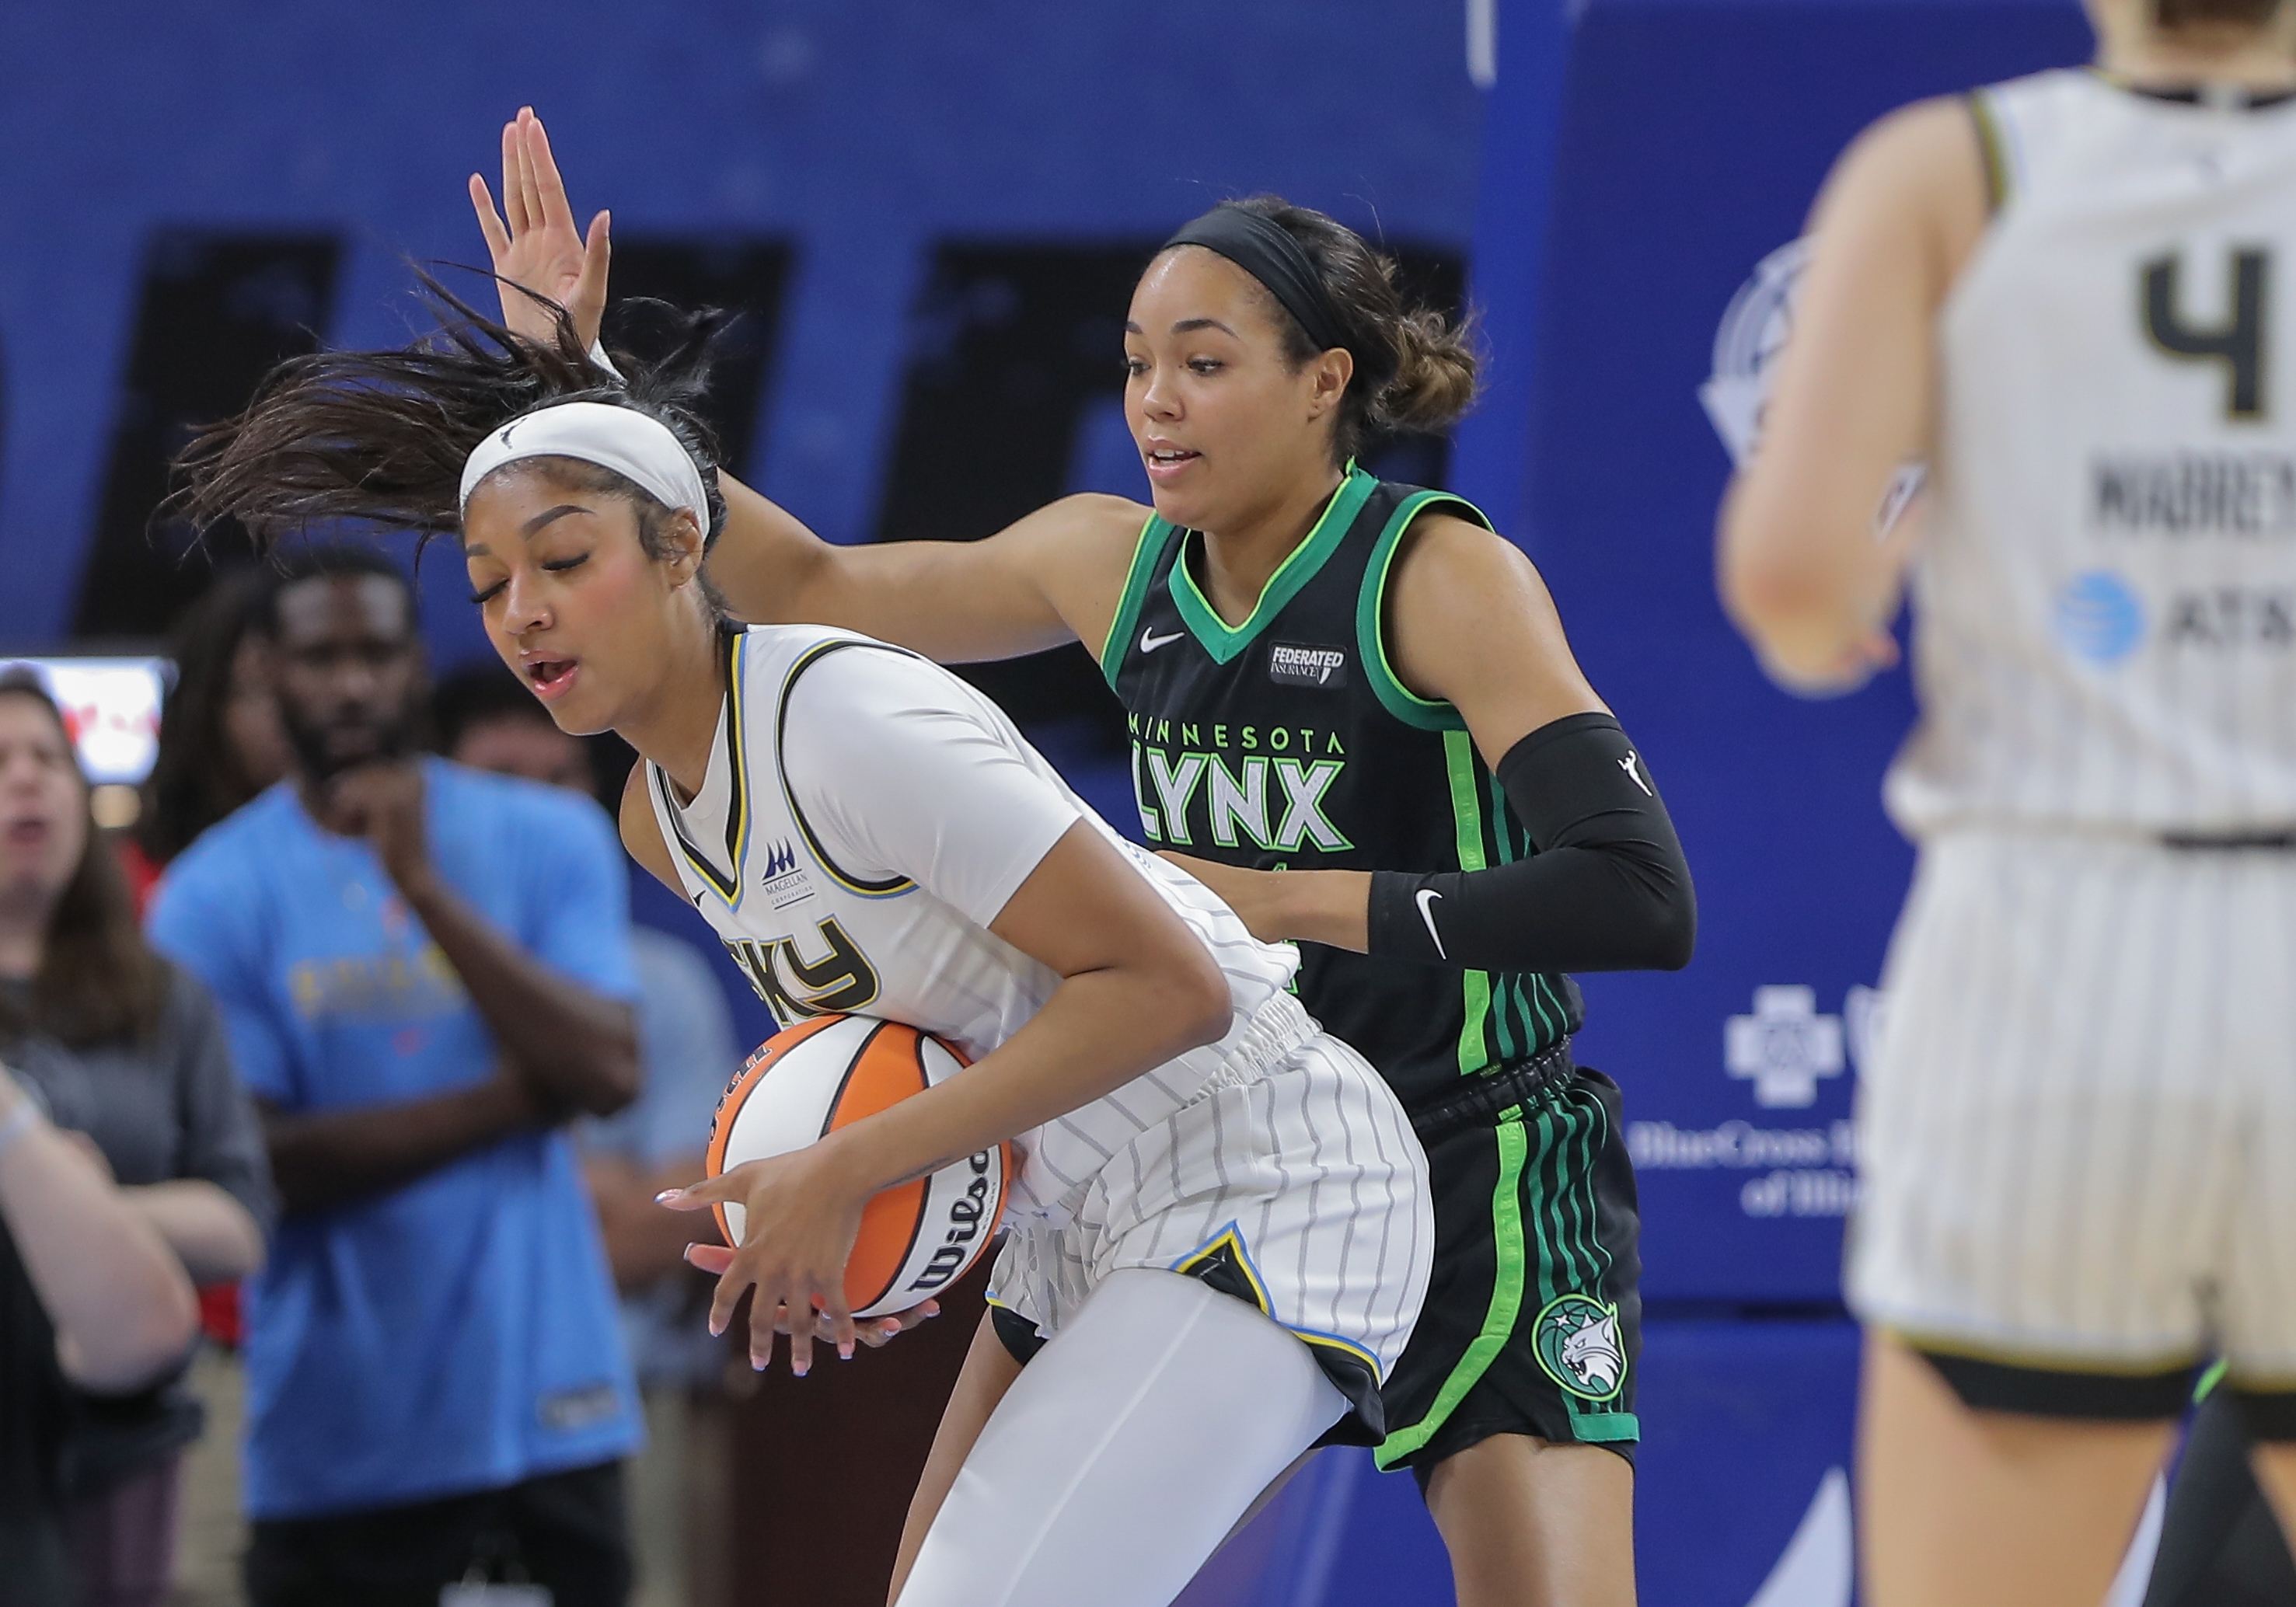 WNBA: JUN 30 Minnesota Lynx at Chicago Sky